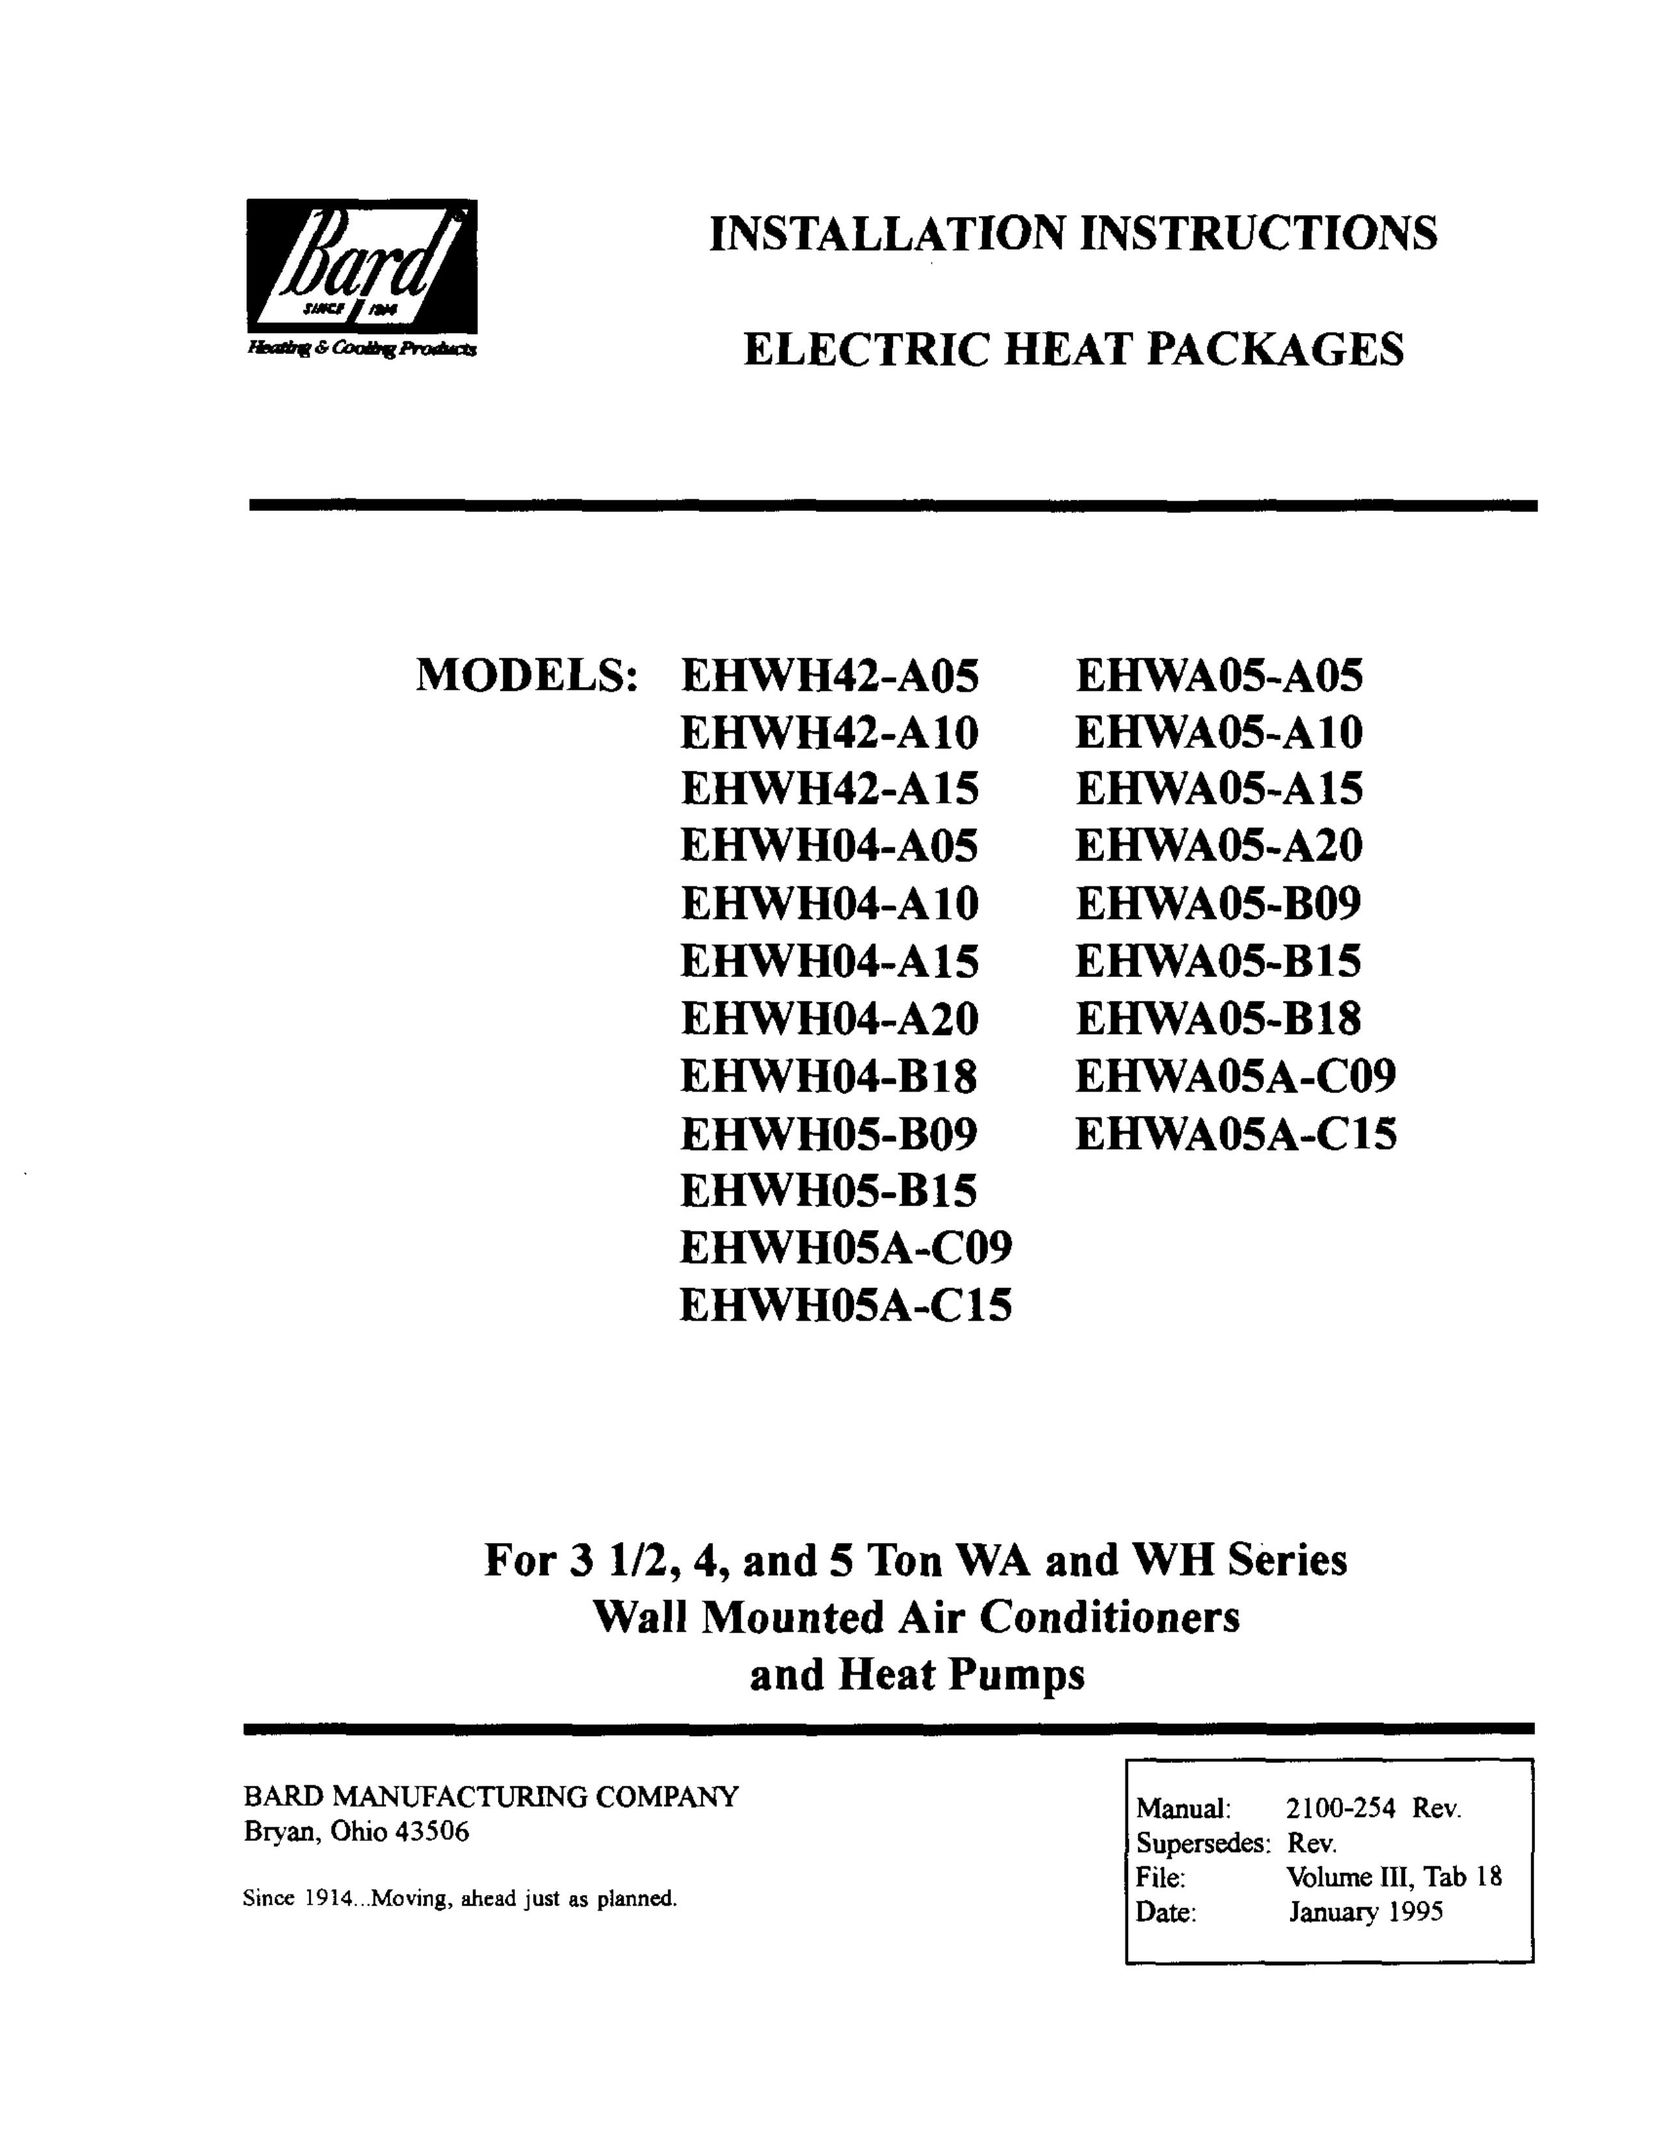 Bard EHWH05-B15 Heat Gun User Manual